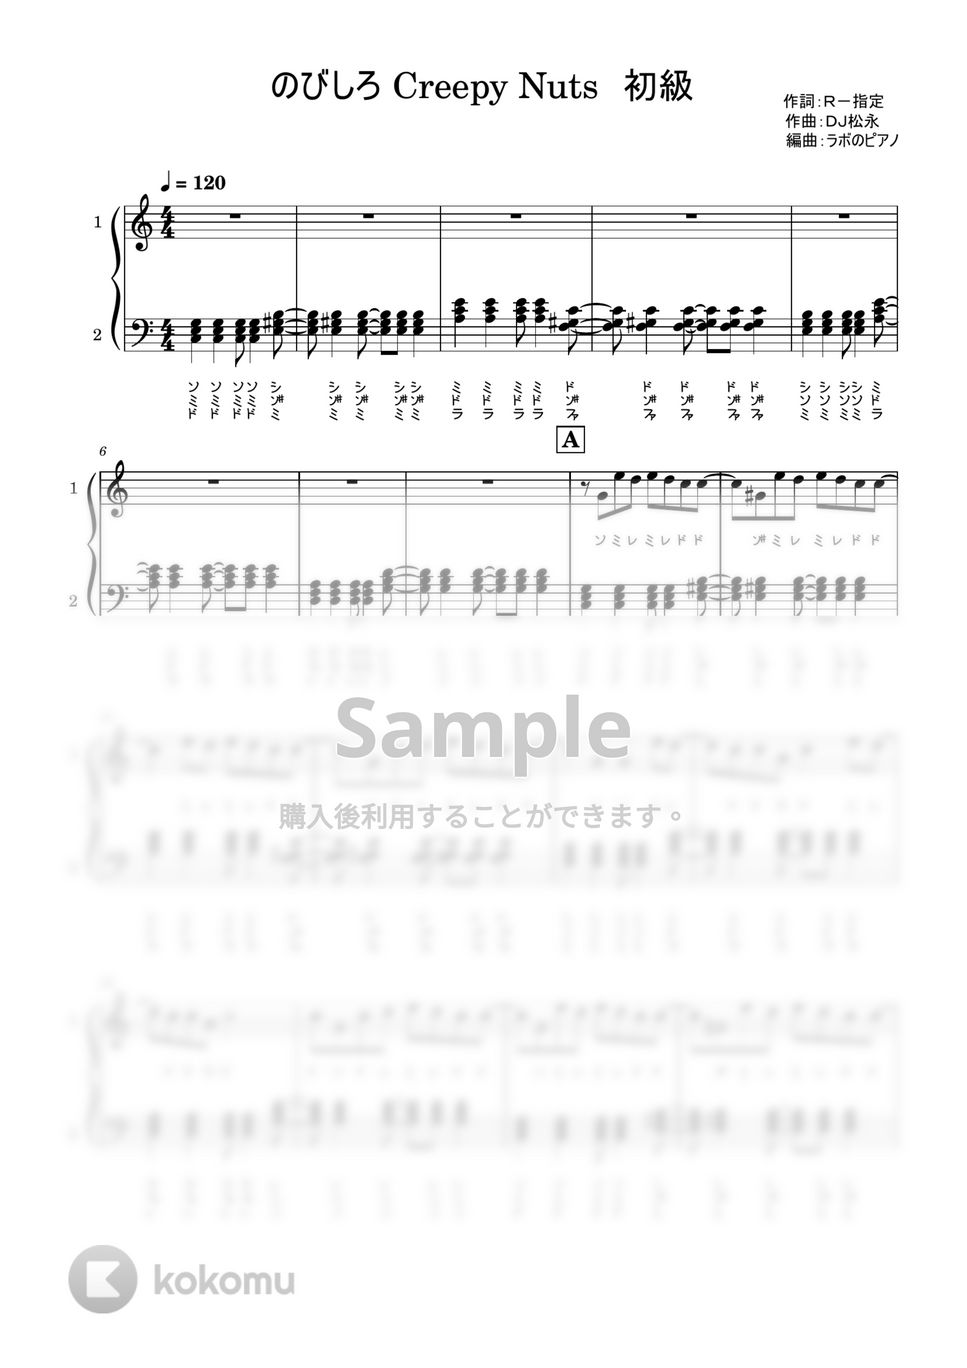 Ｒ－指定/ＤＪ松永 - のびしろ Creepy Nuts 「povo2.0」CMソング ドレミ付 白鍵ver. (Piano/連弾/楽譜/演奏会/親子連弾/鍵盤/簡単ピアノ/ドレミ付/白鍵ピアノ) by ラボのピアノ